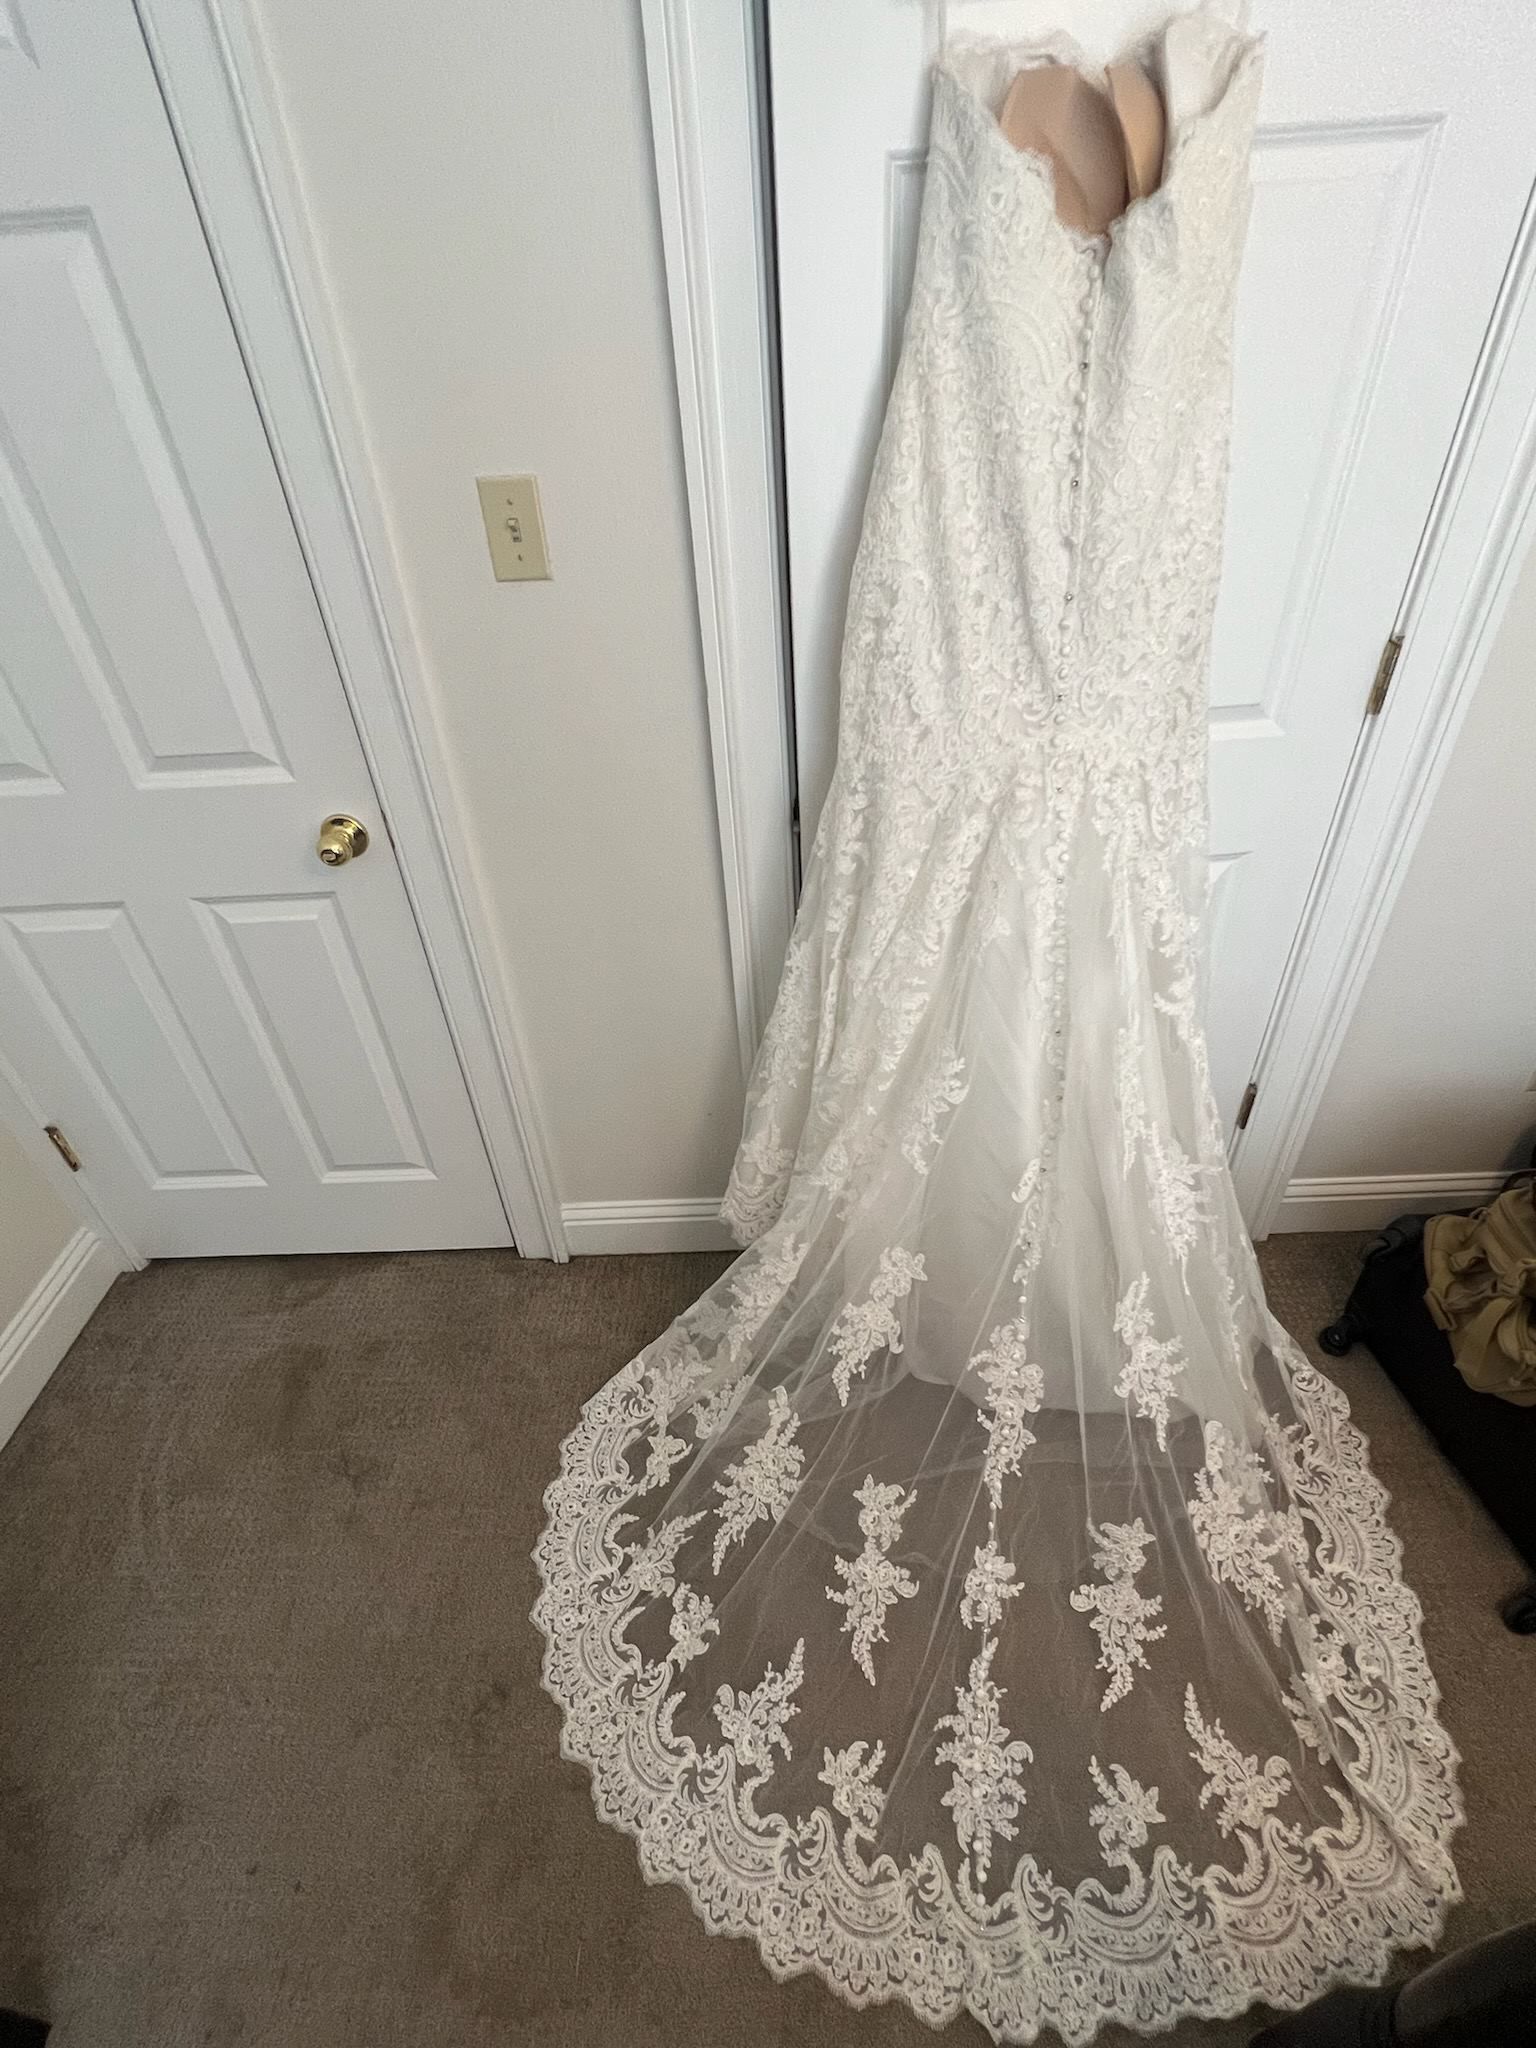 Venturas Wedding Dress!